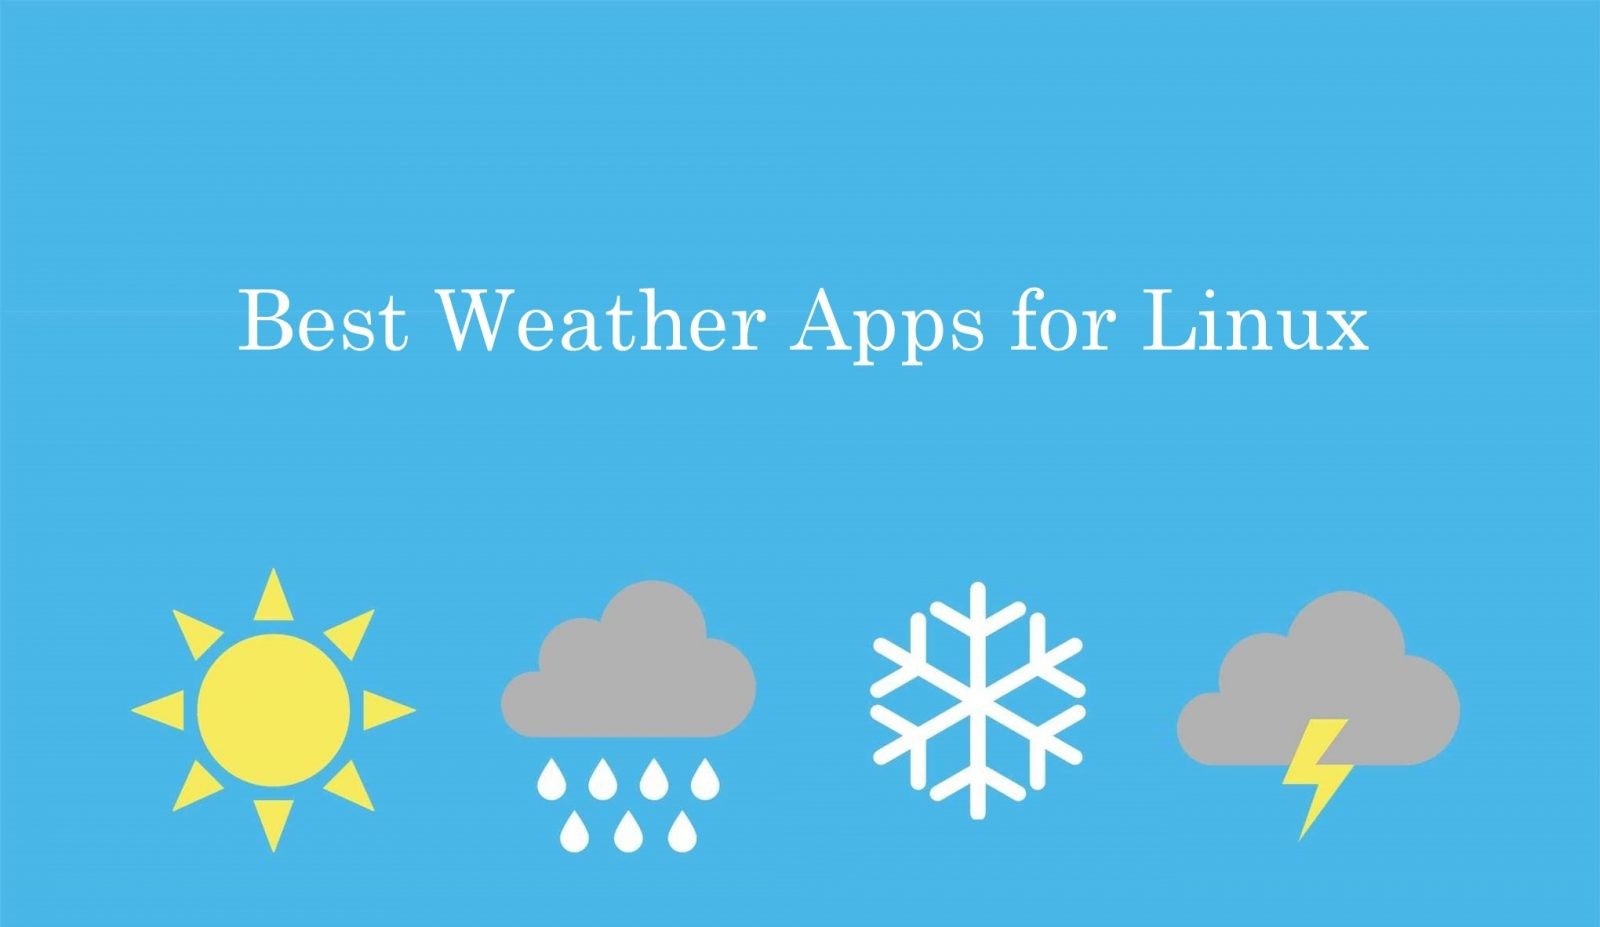 linux mint weather desklet